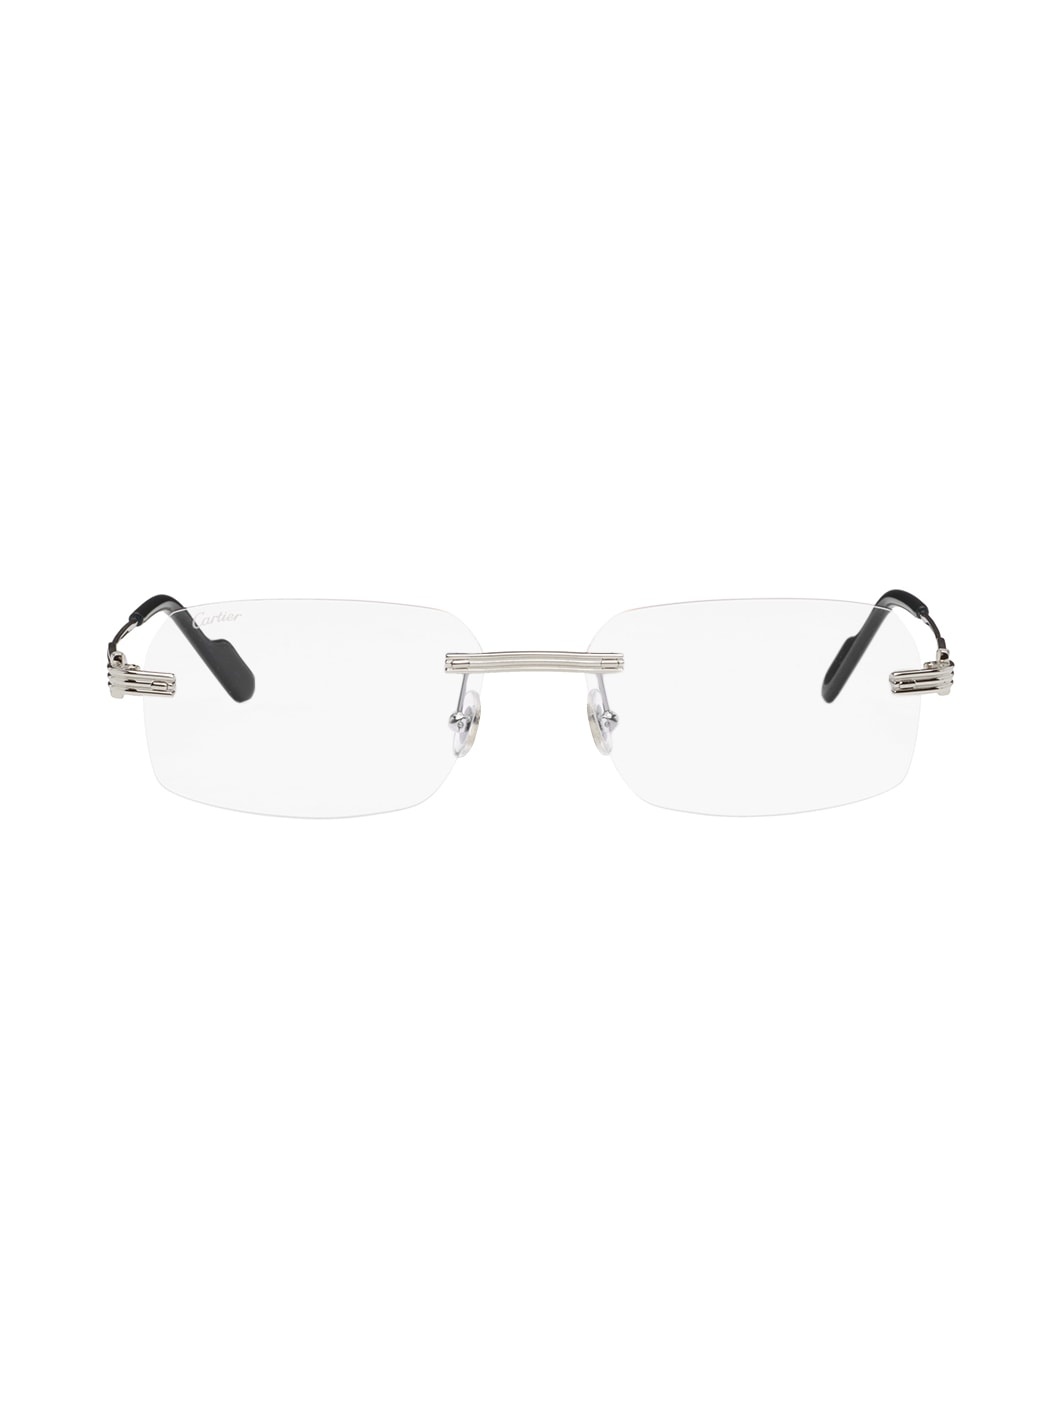 Silver Rectangular Sunglasses - 1